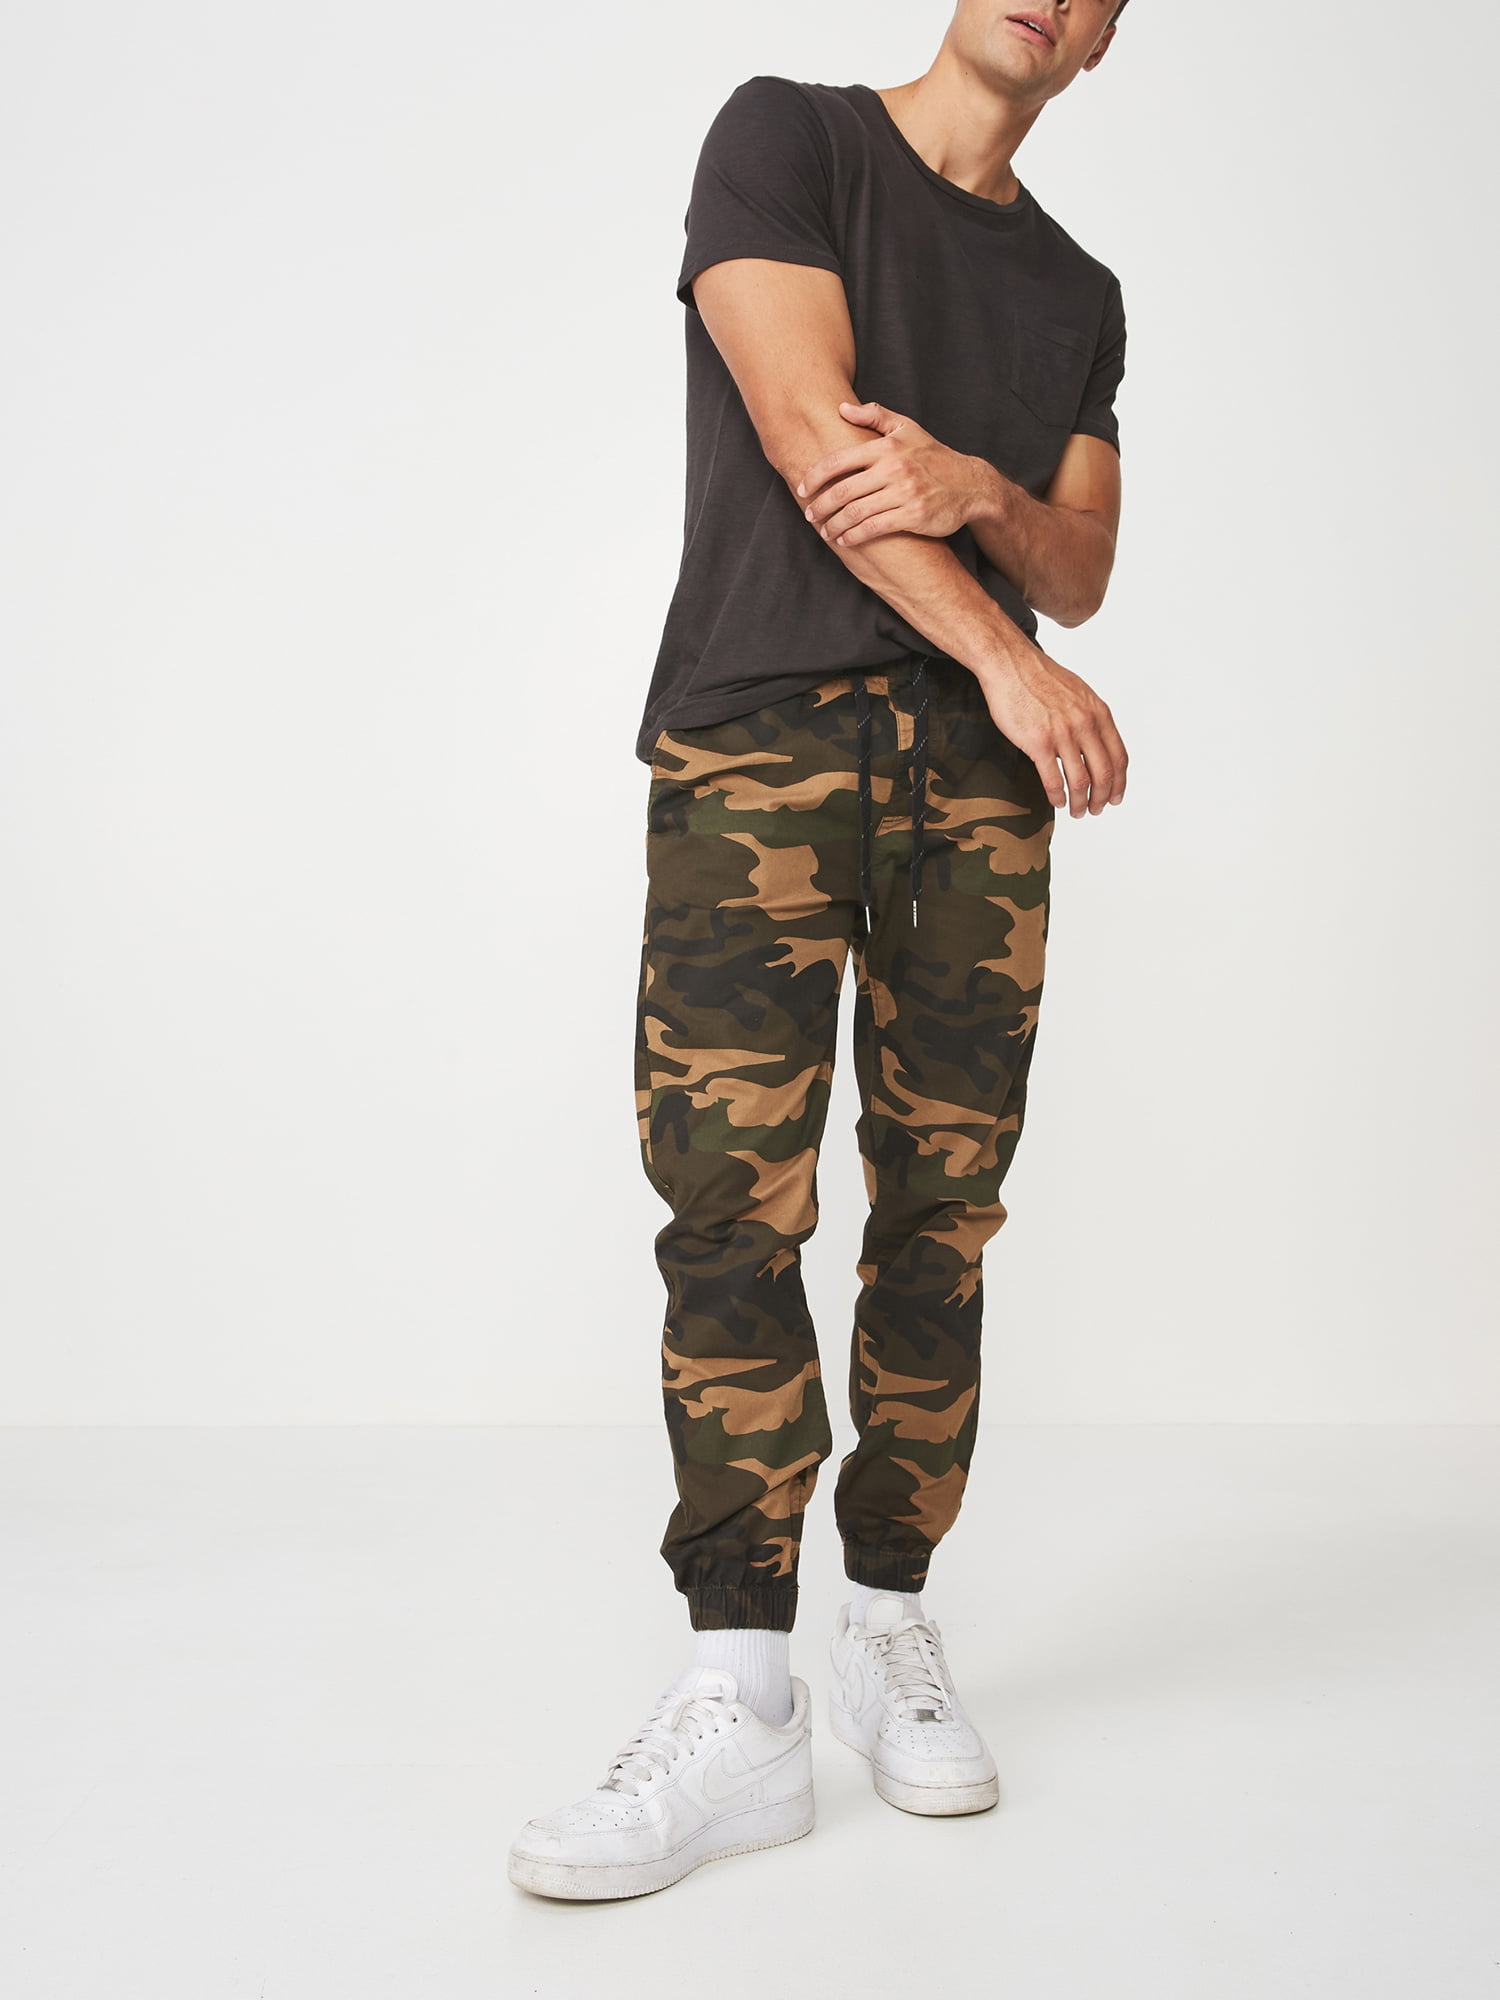 Drake Cuffed Pant, Men's Fashion